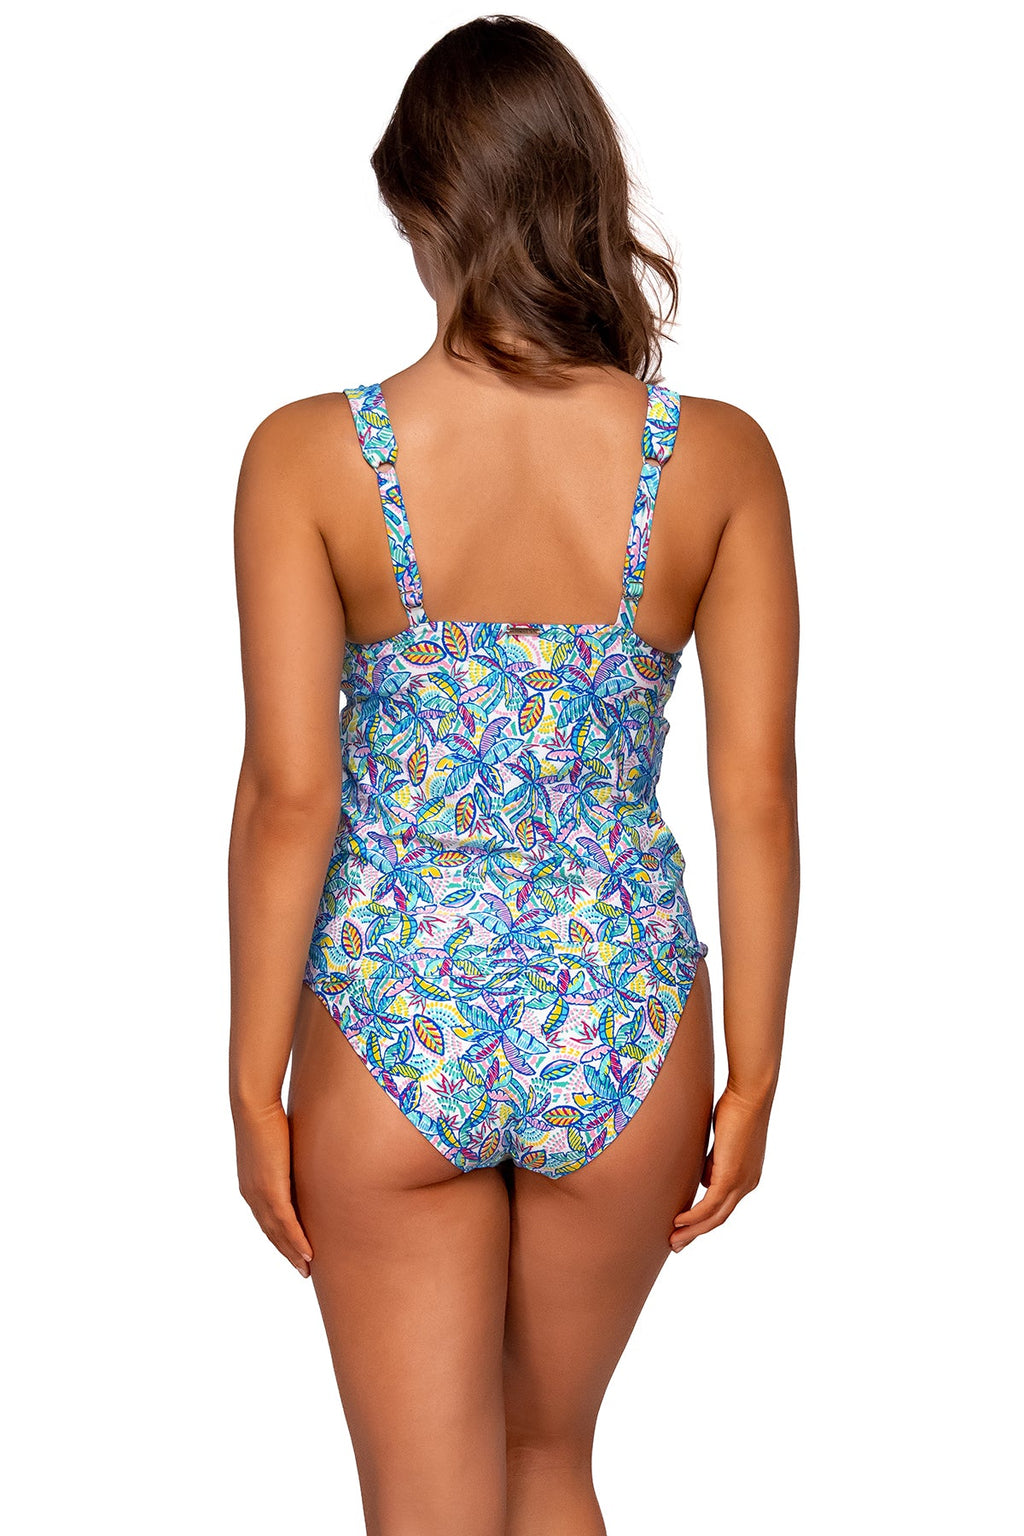 36H Bra Sized Swimsuits  Bikini Tops, Tankinis, One Piece Swimwear